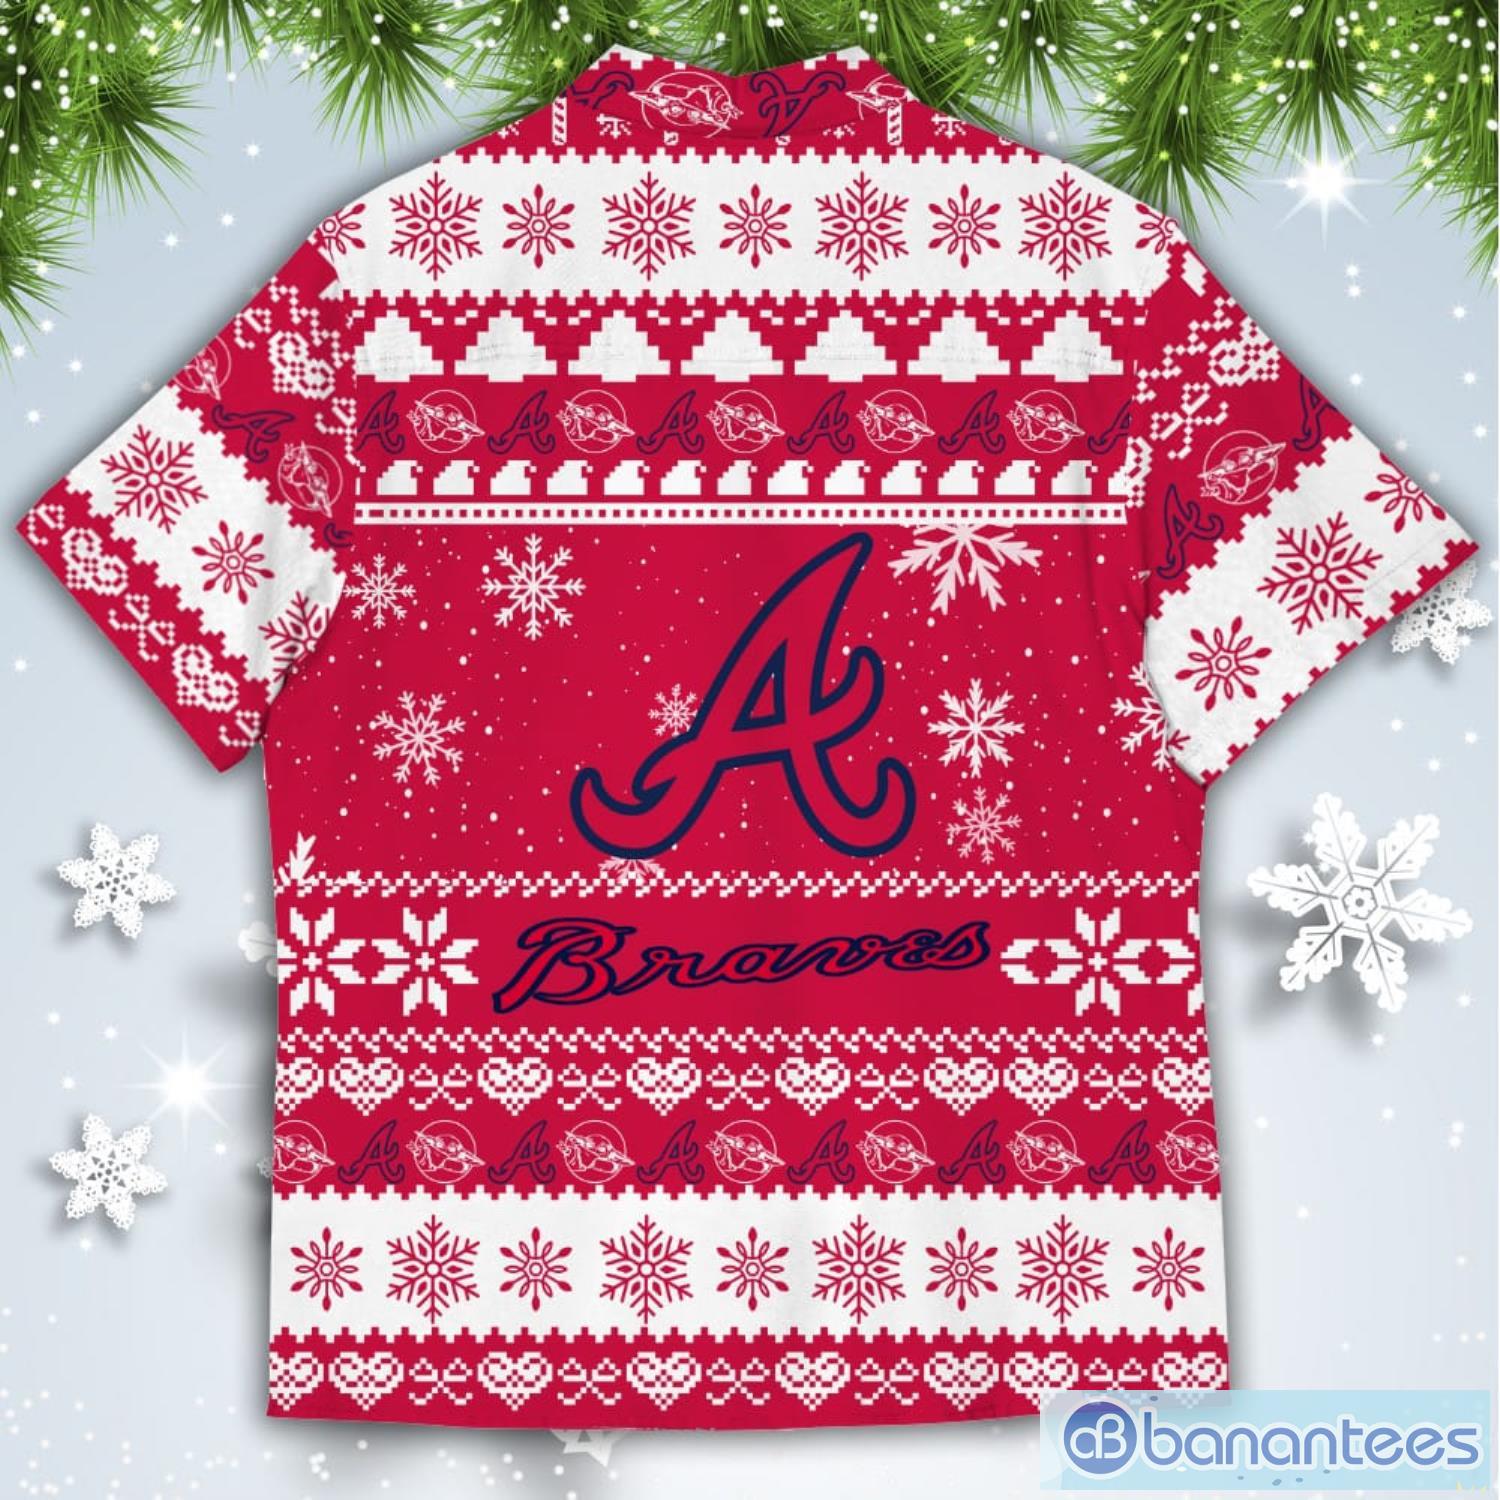 Atlanta Braves Baby Yoda Star Wars American Ugly Christmas Sweater